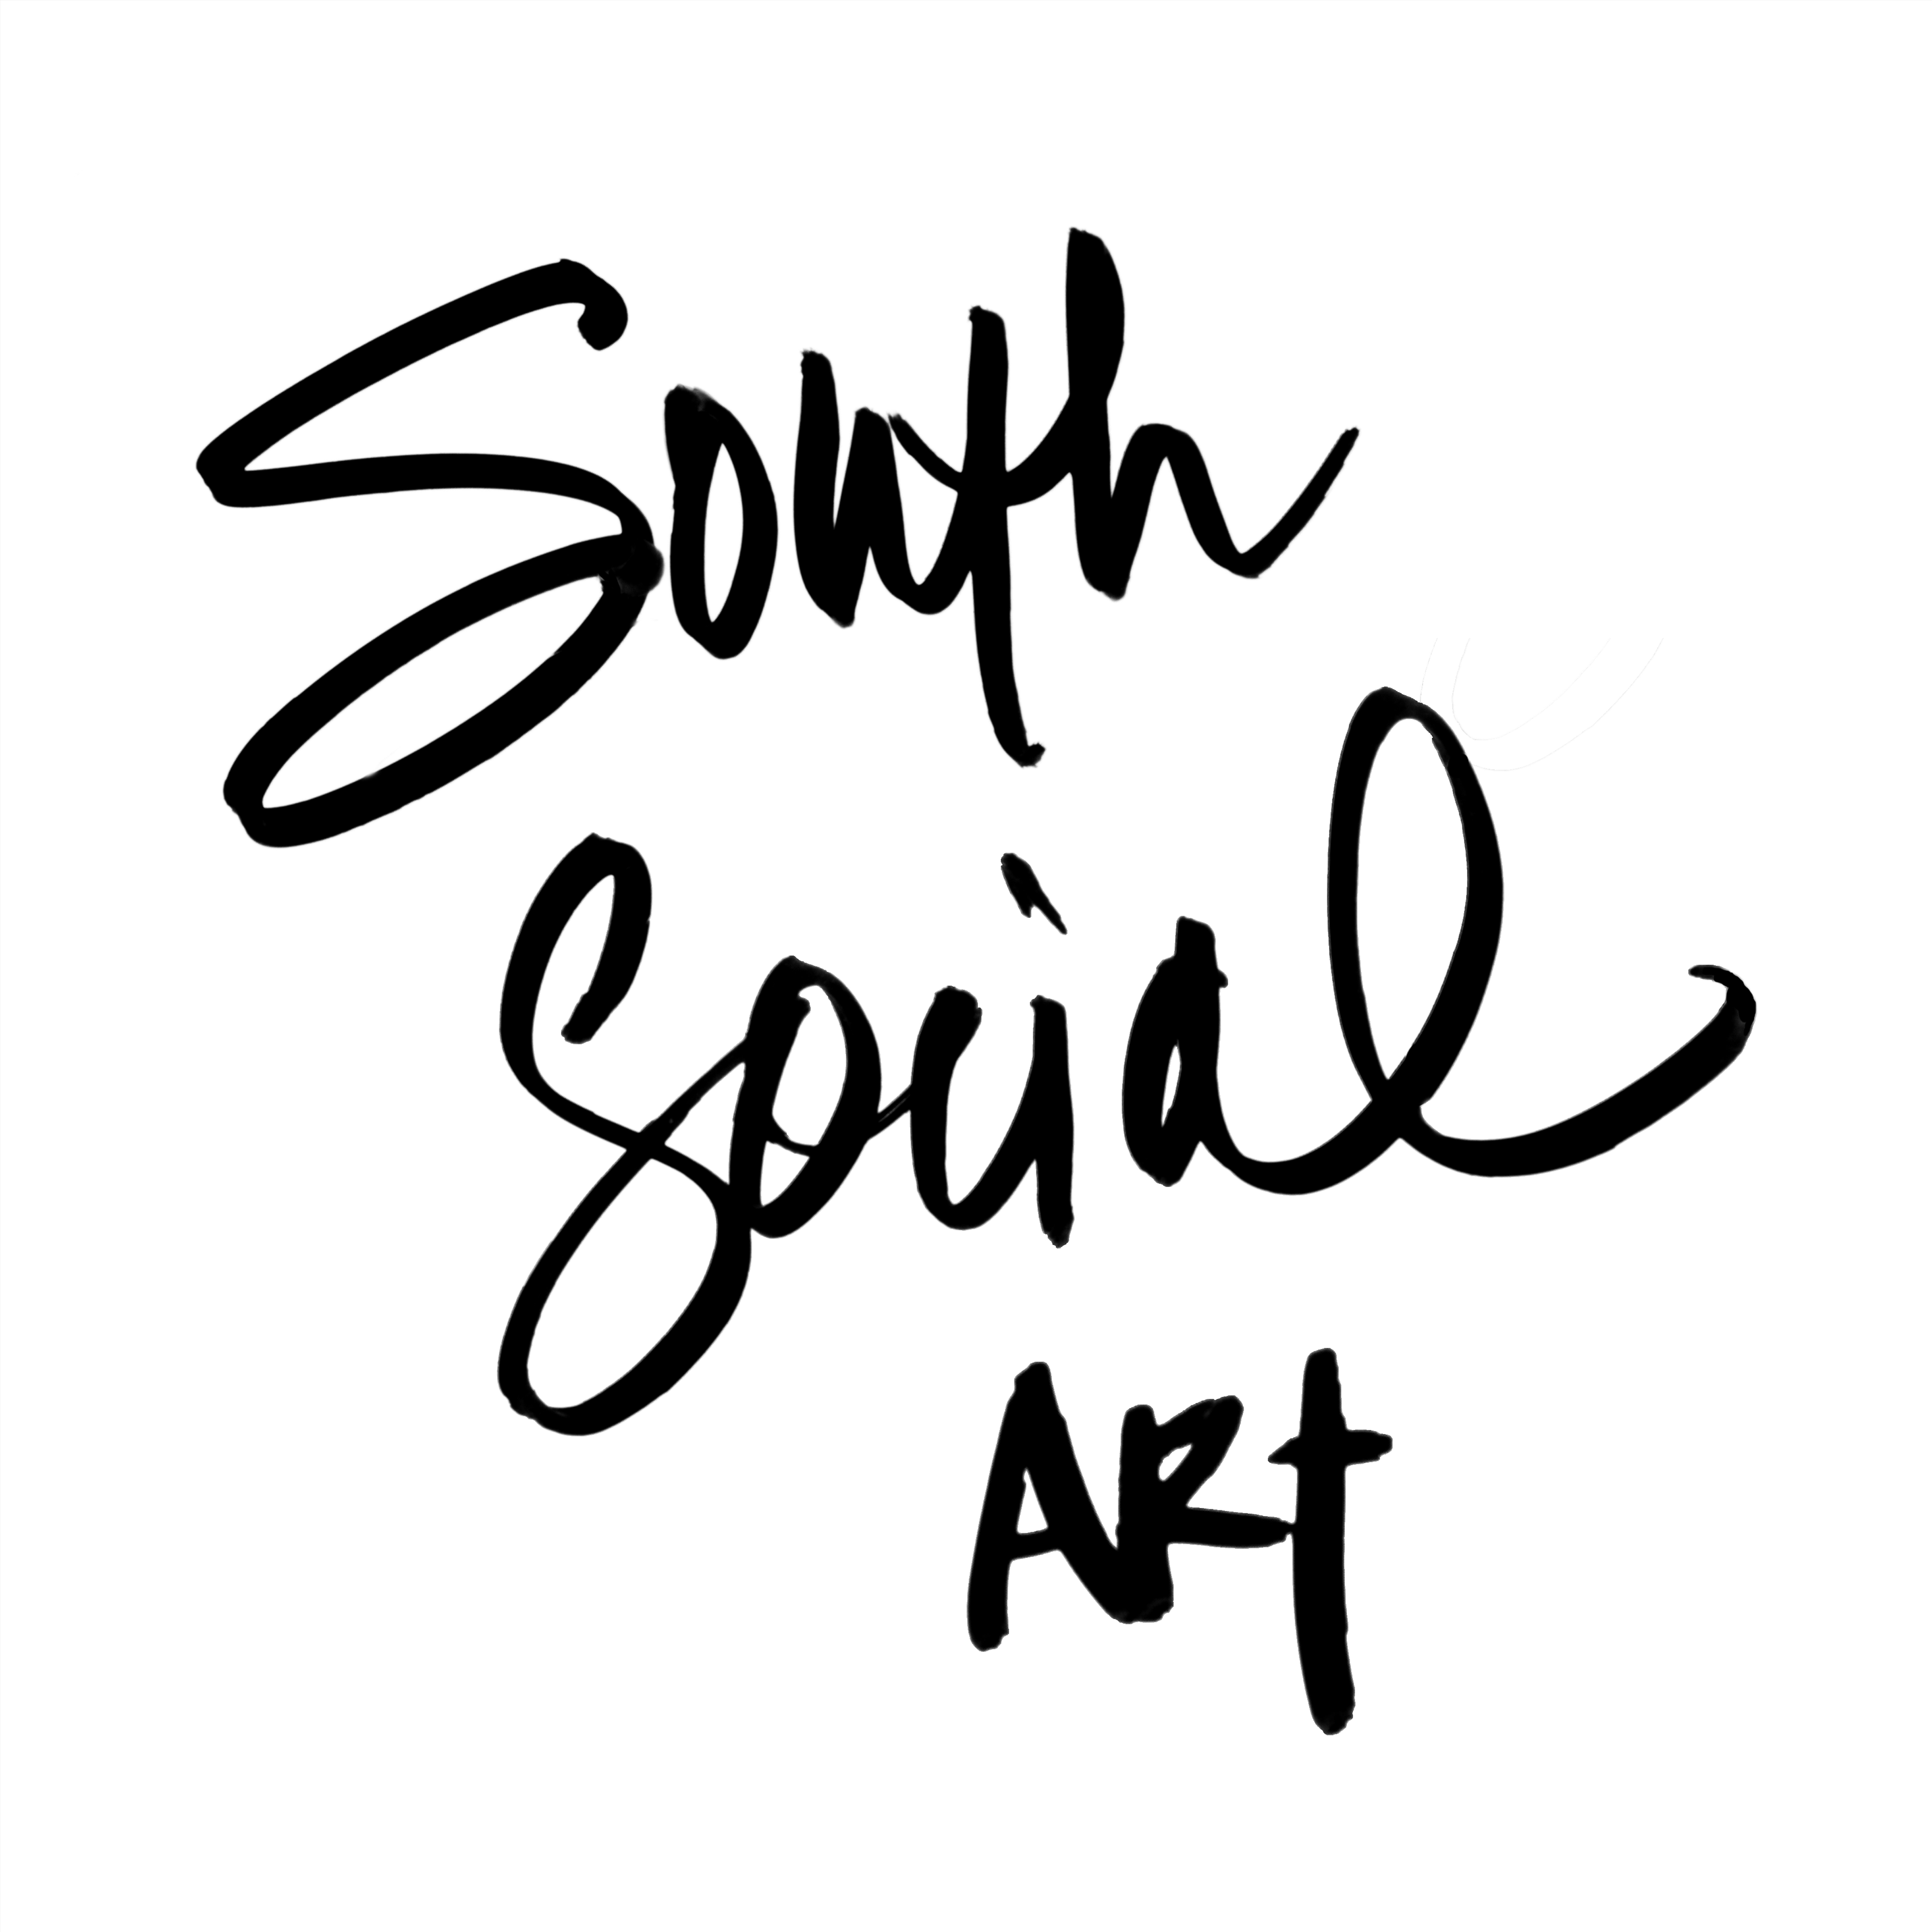 South Social Art